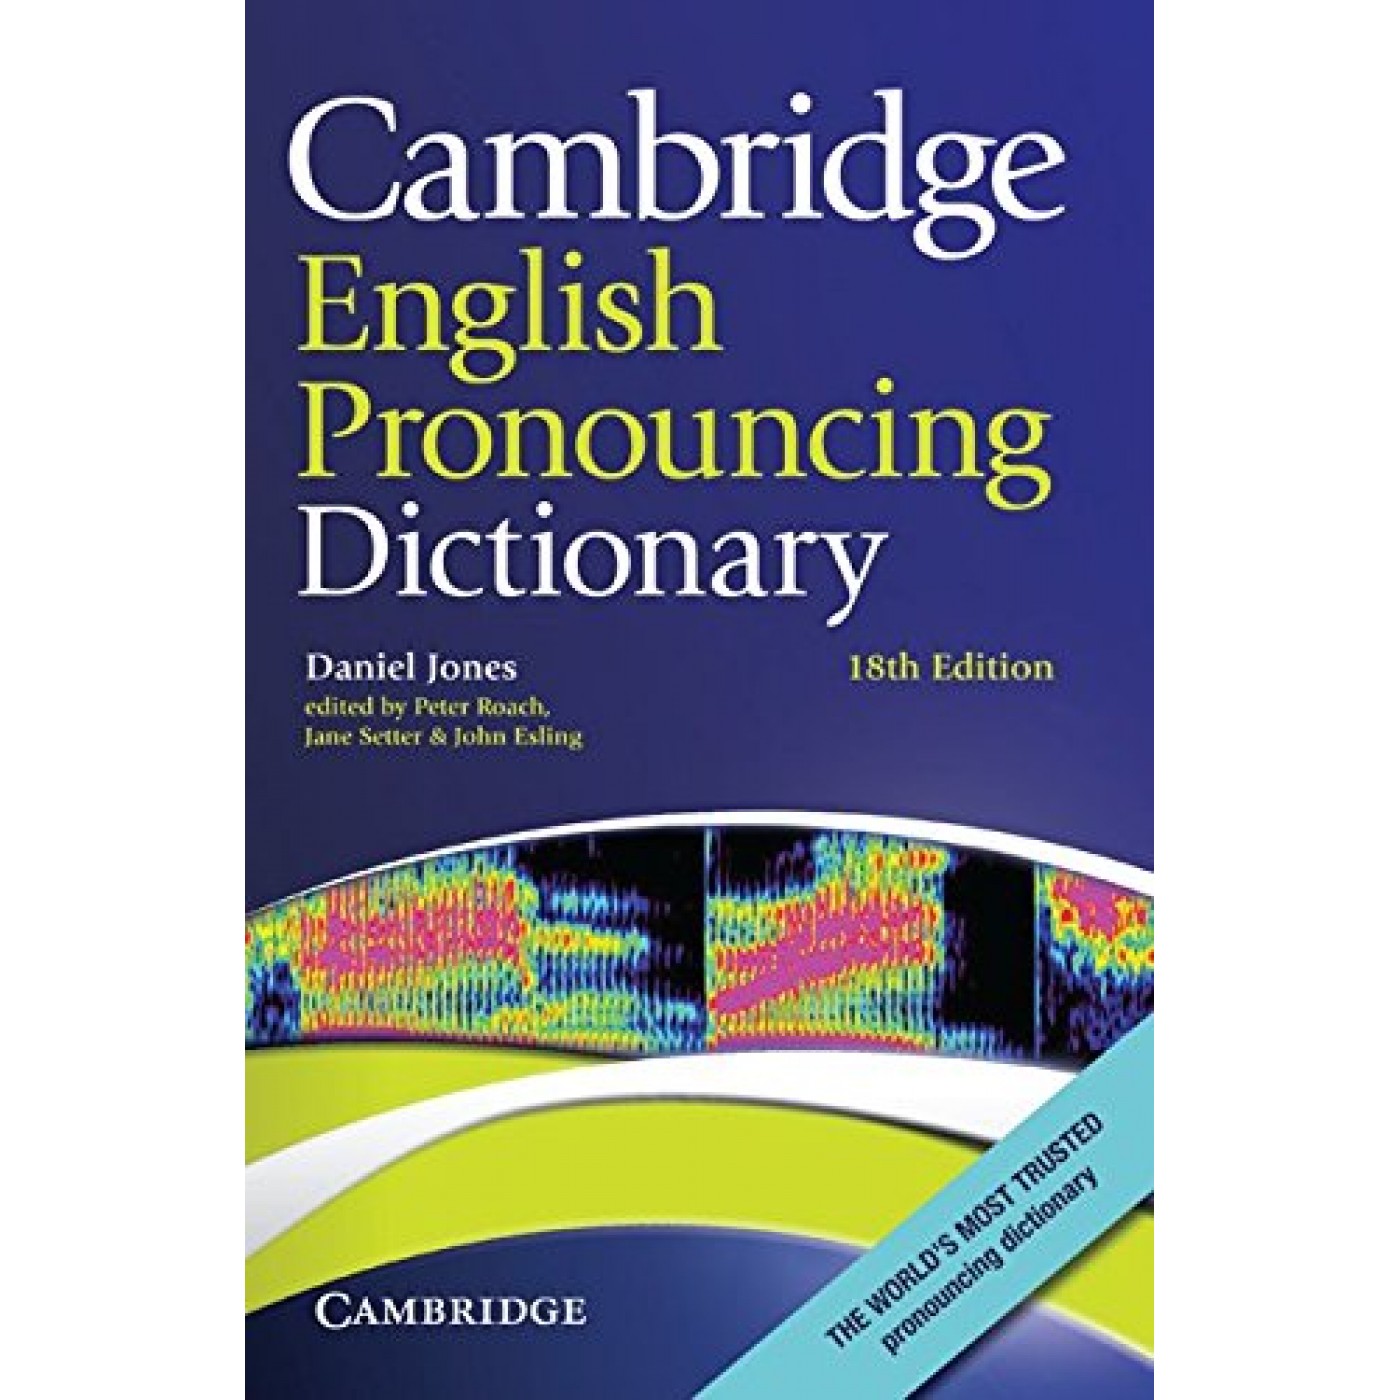 essay cambridge dictionary